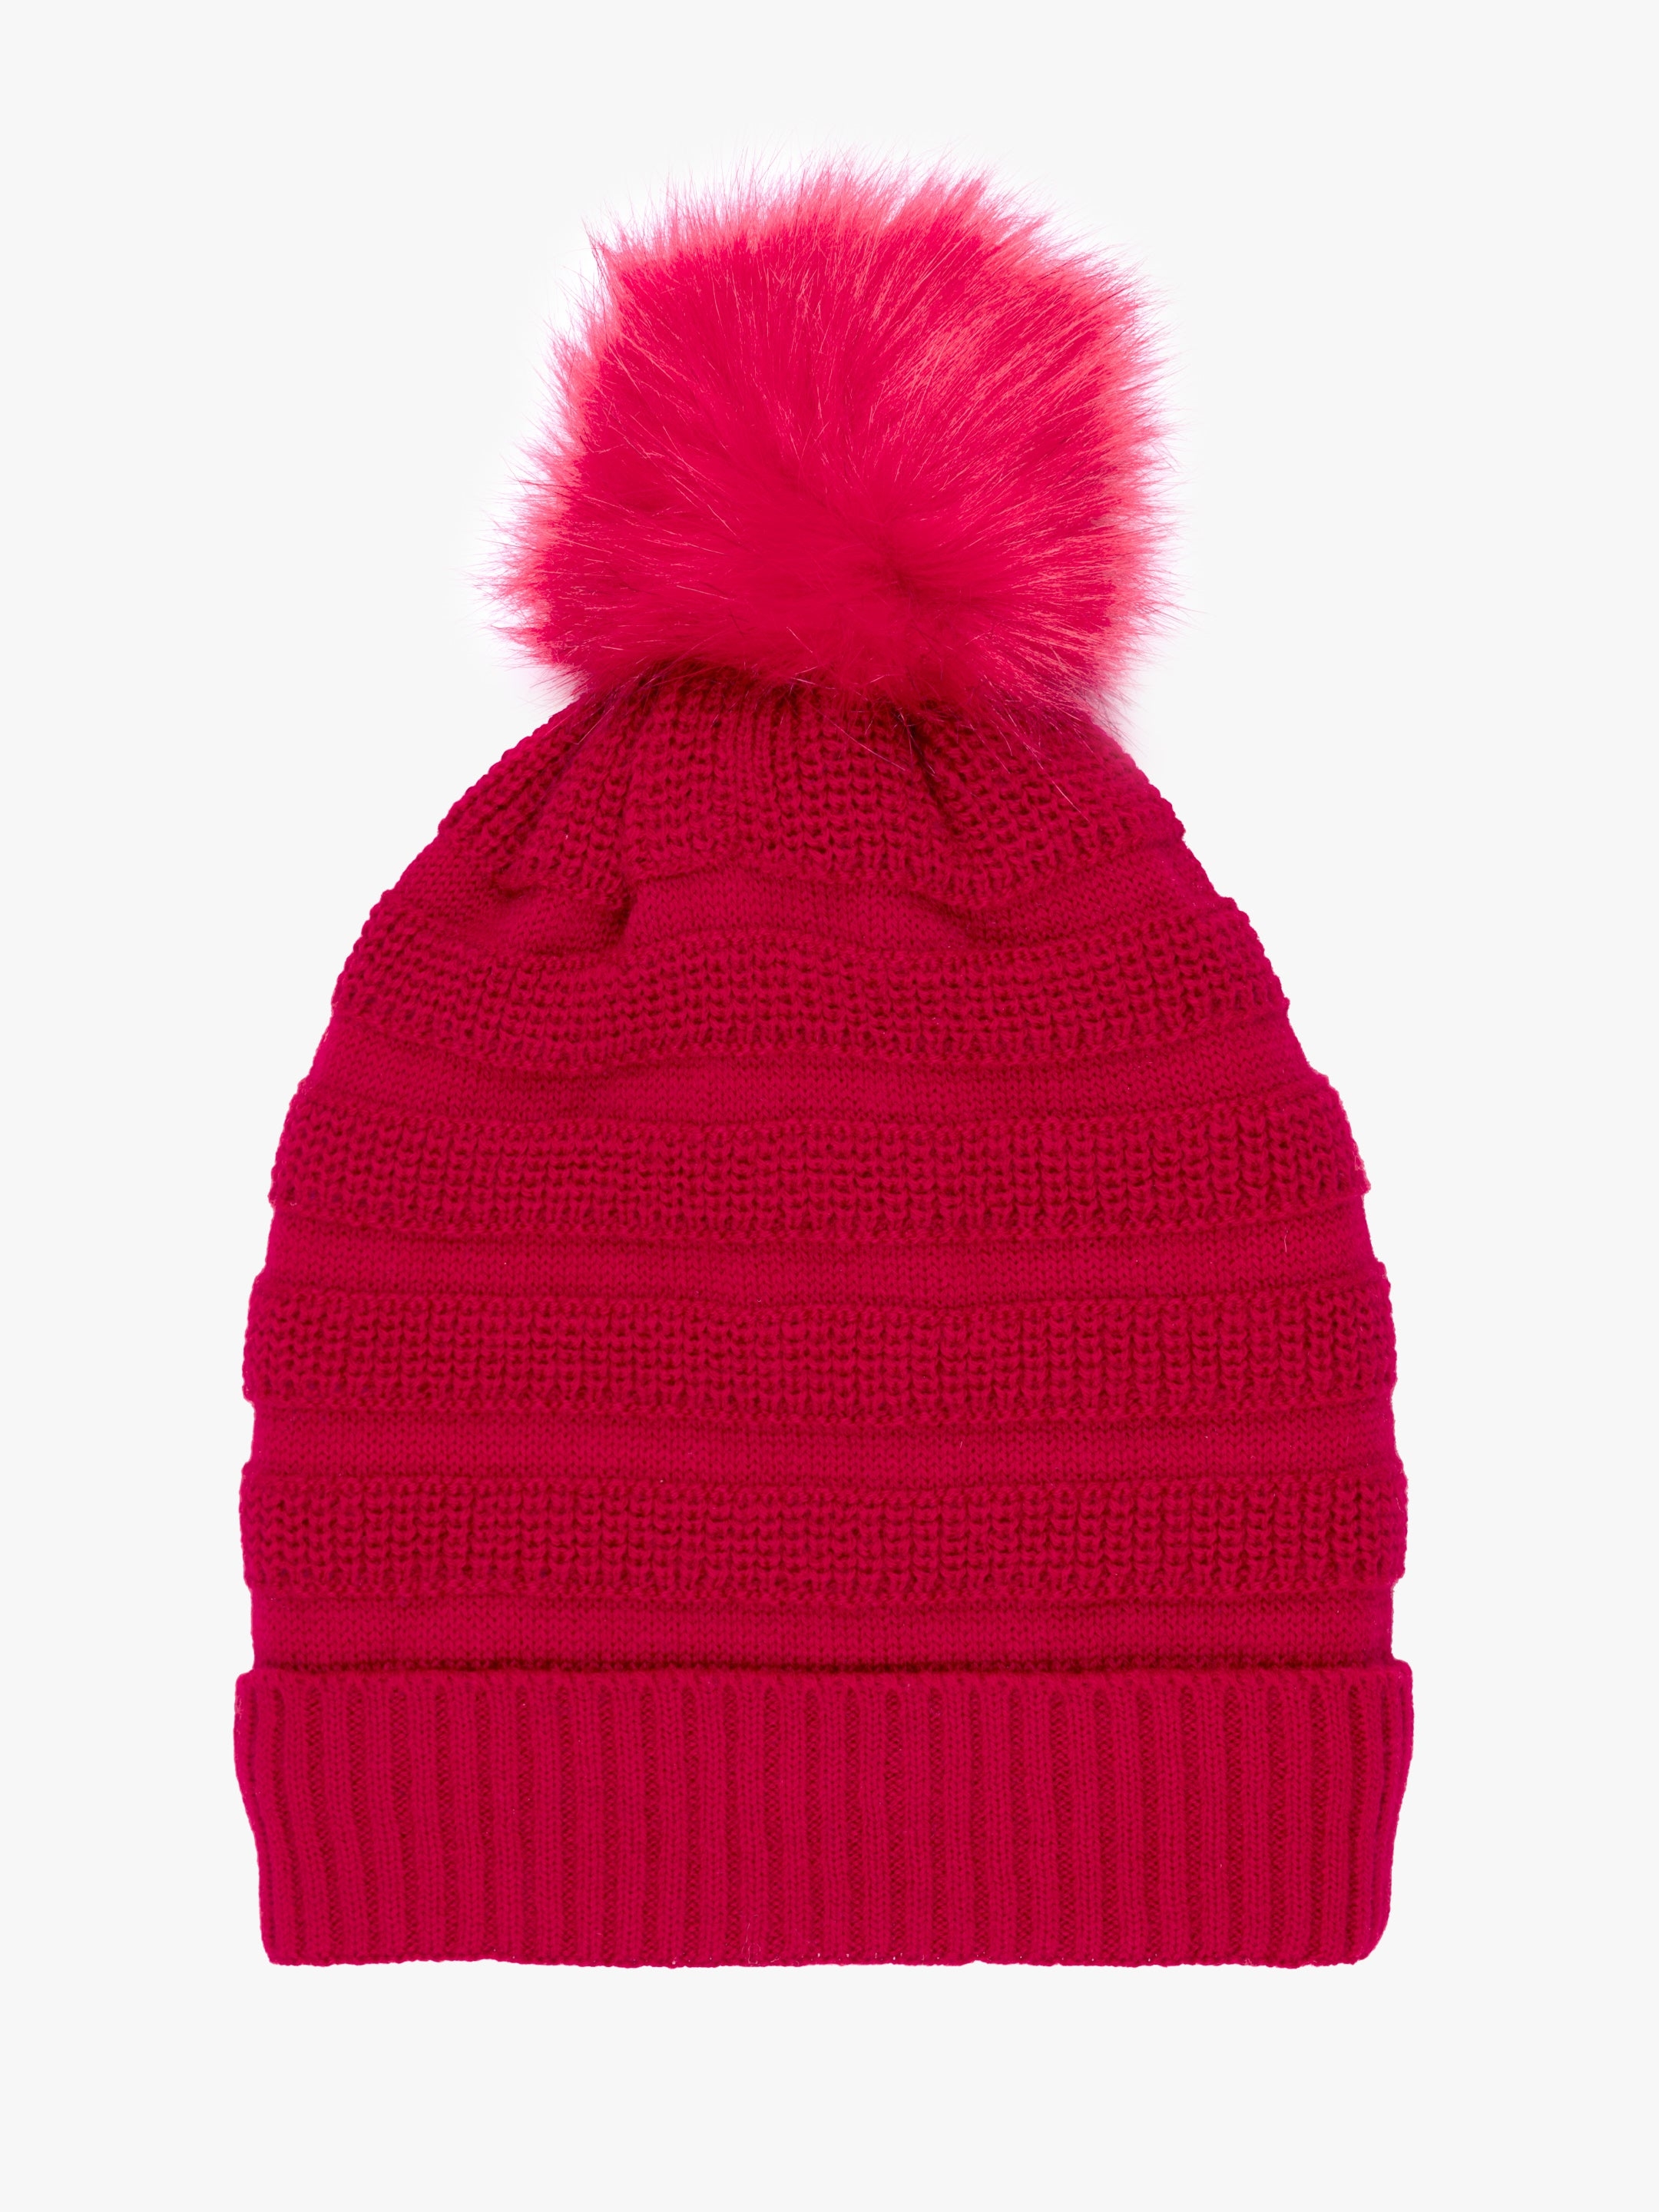 Womens Knitted Winter Cap